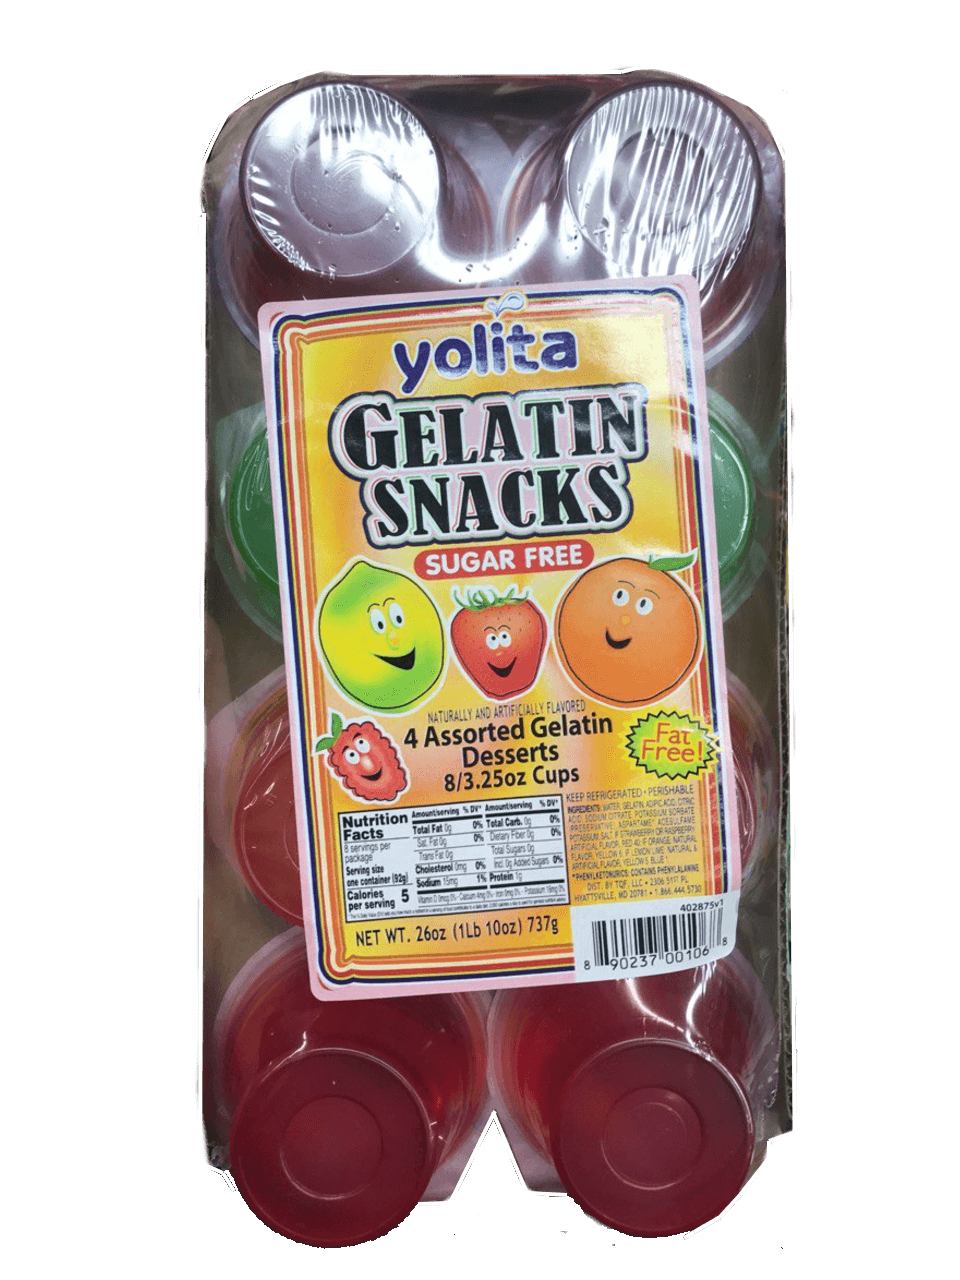 Yolita - Gelatin Snacks 8ct/3.25 oz Cups.